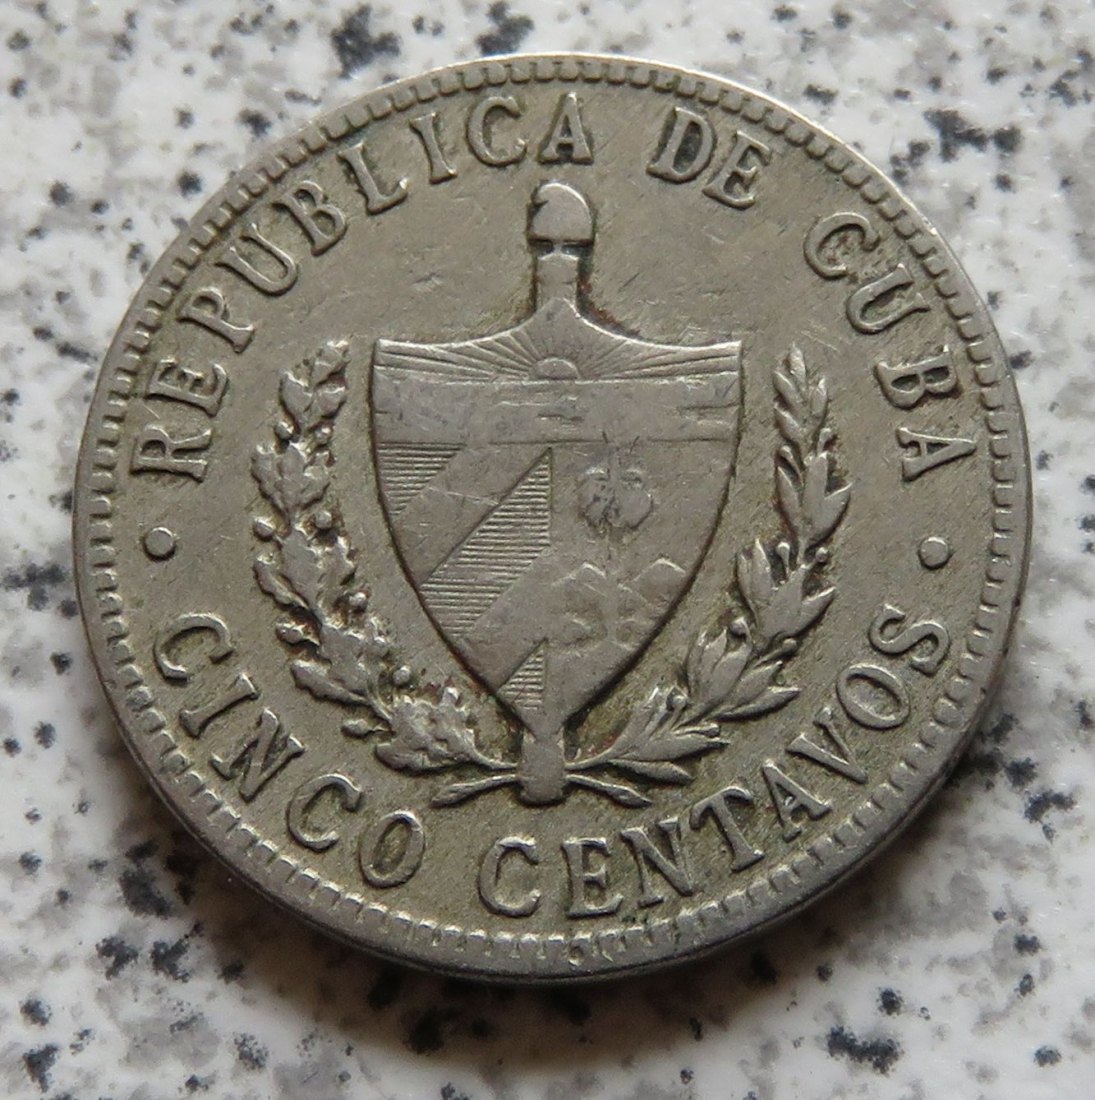  Cuba 5 Centavos 1946 (2)   